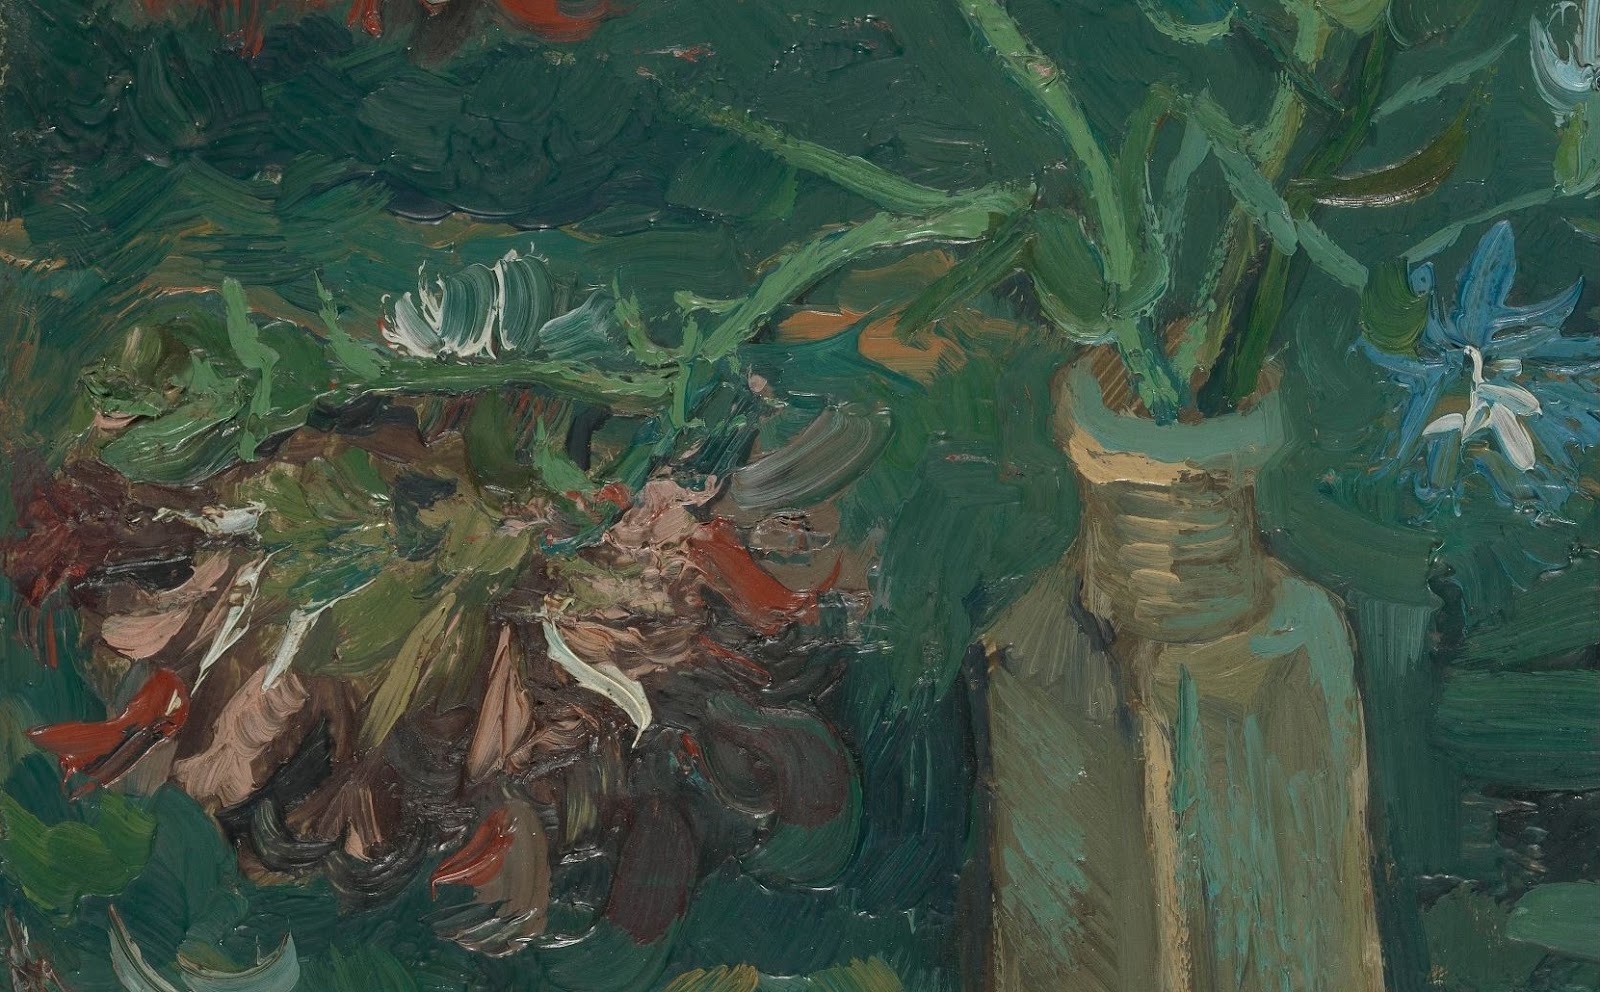 Vincent+Van+Gogh-1853-1890 (463).JPG